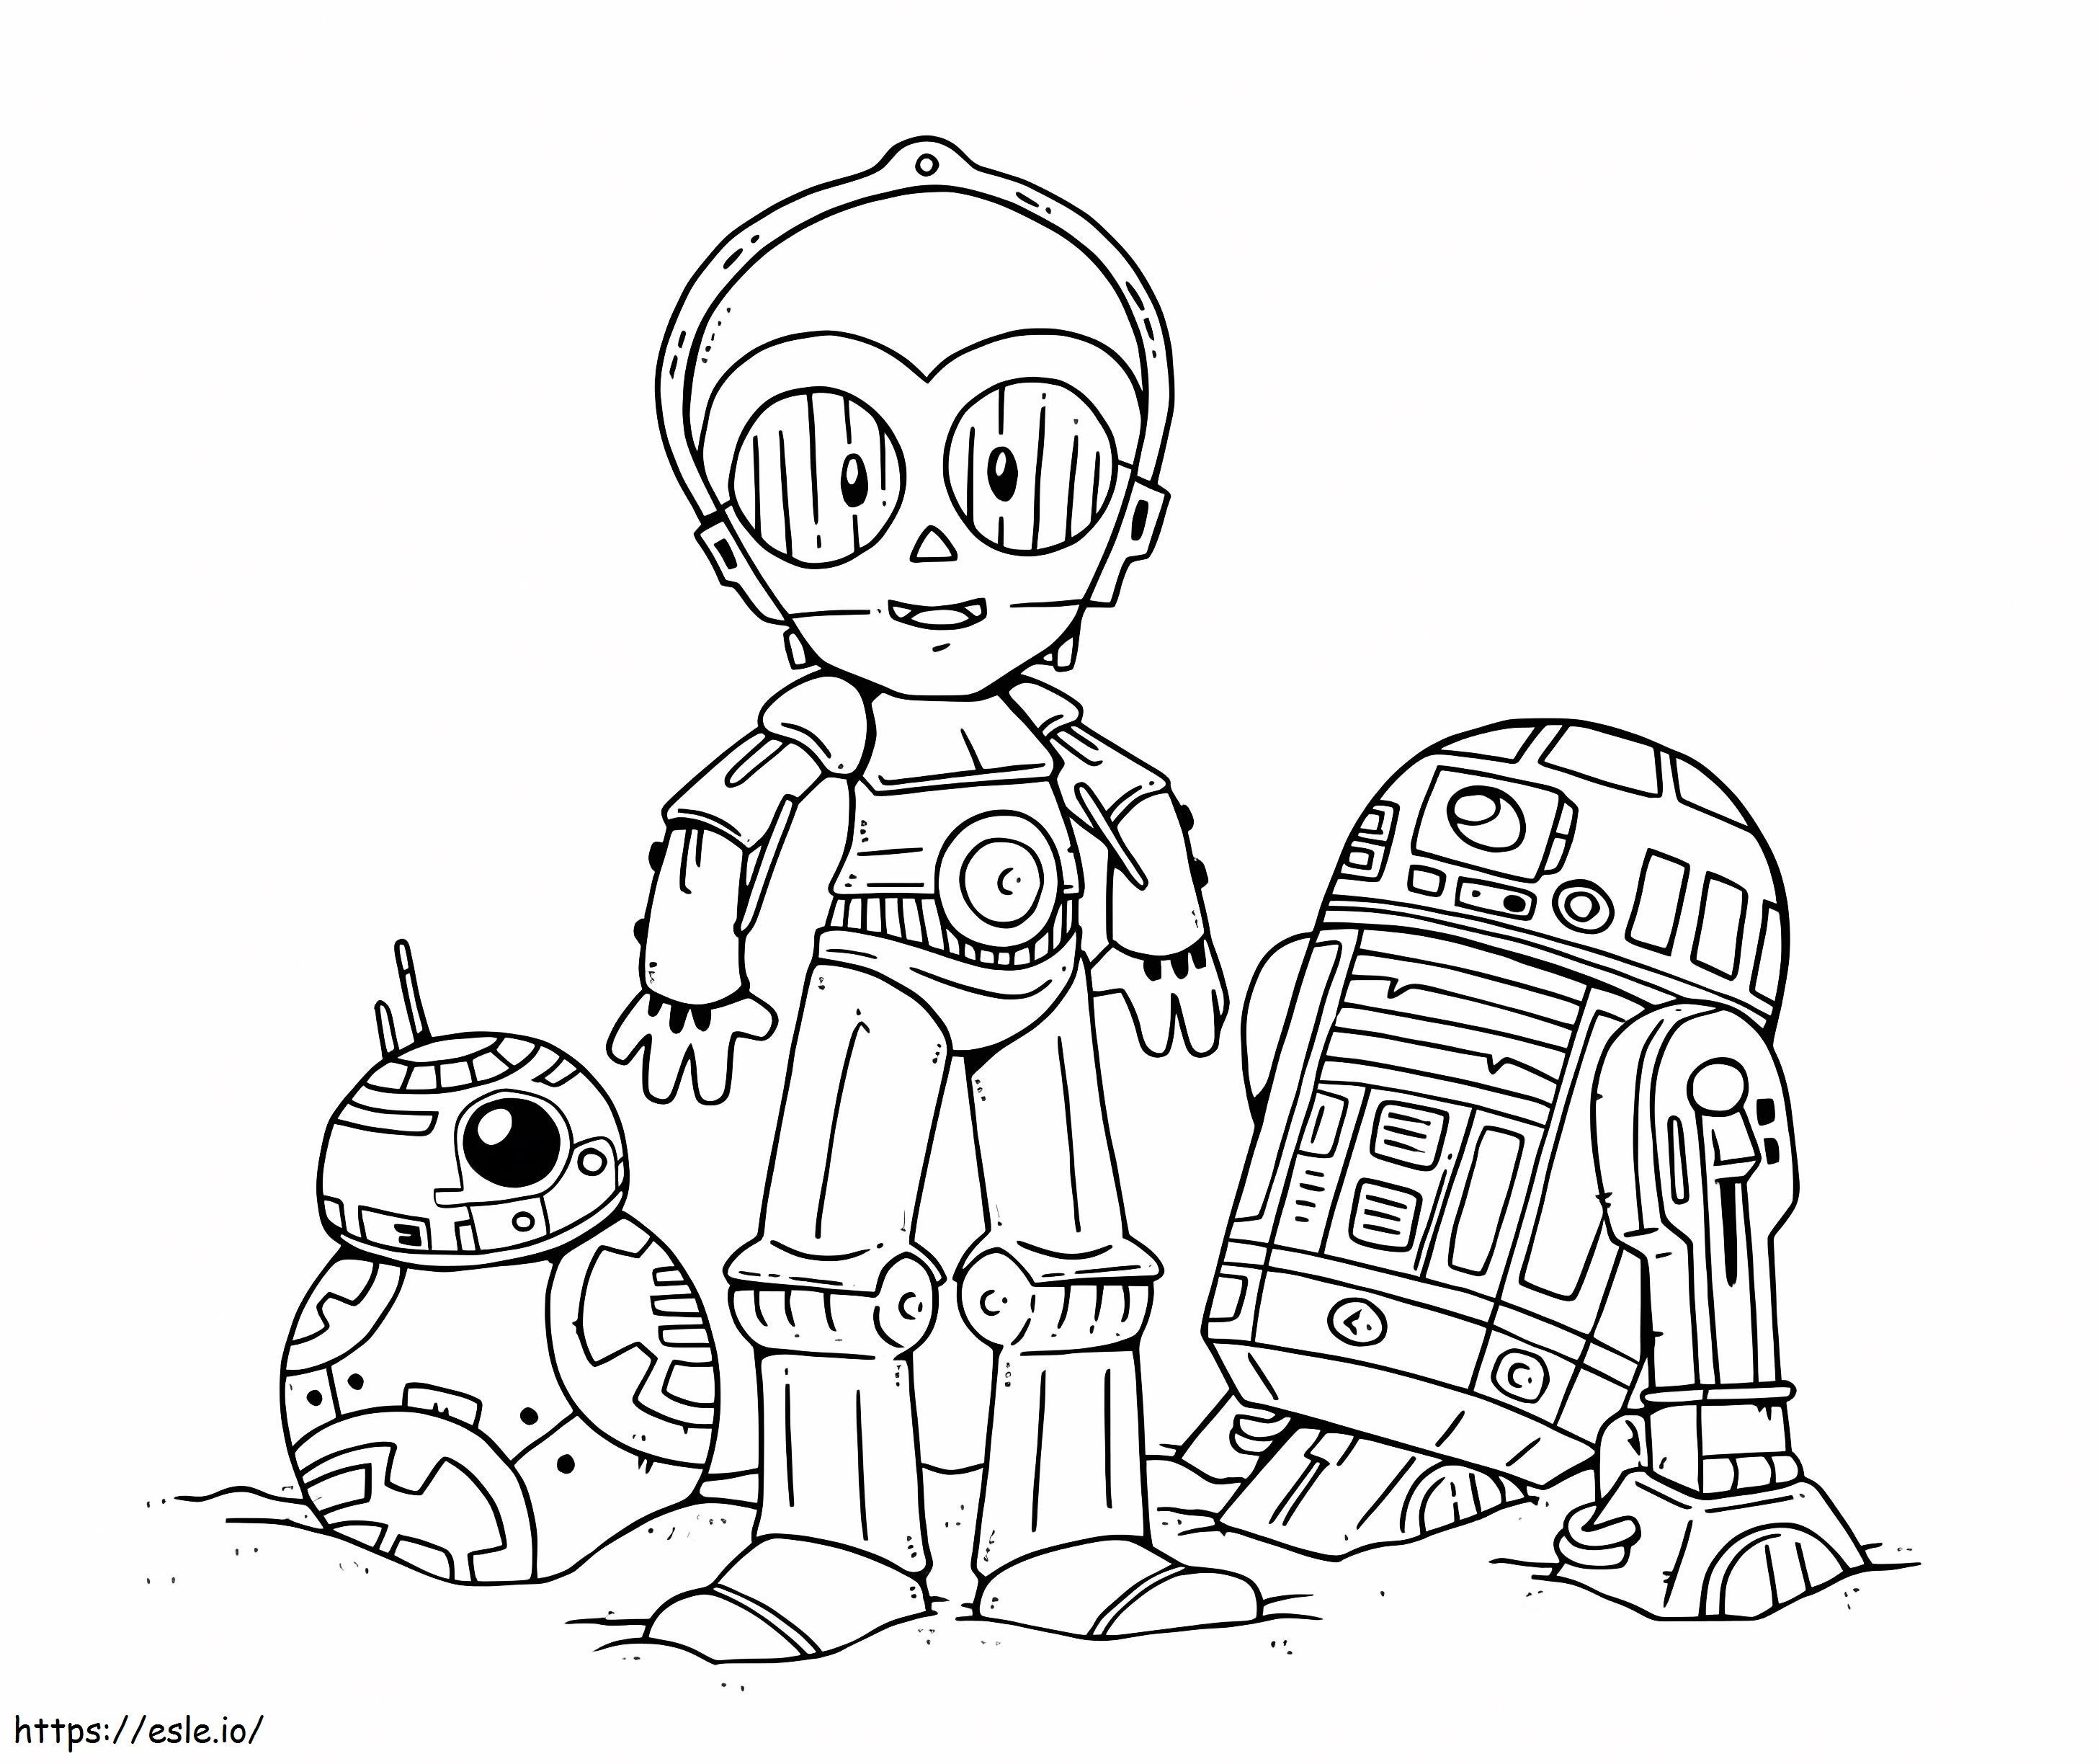 Chibi Droids Star Wars coloring page